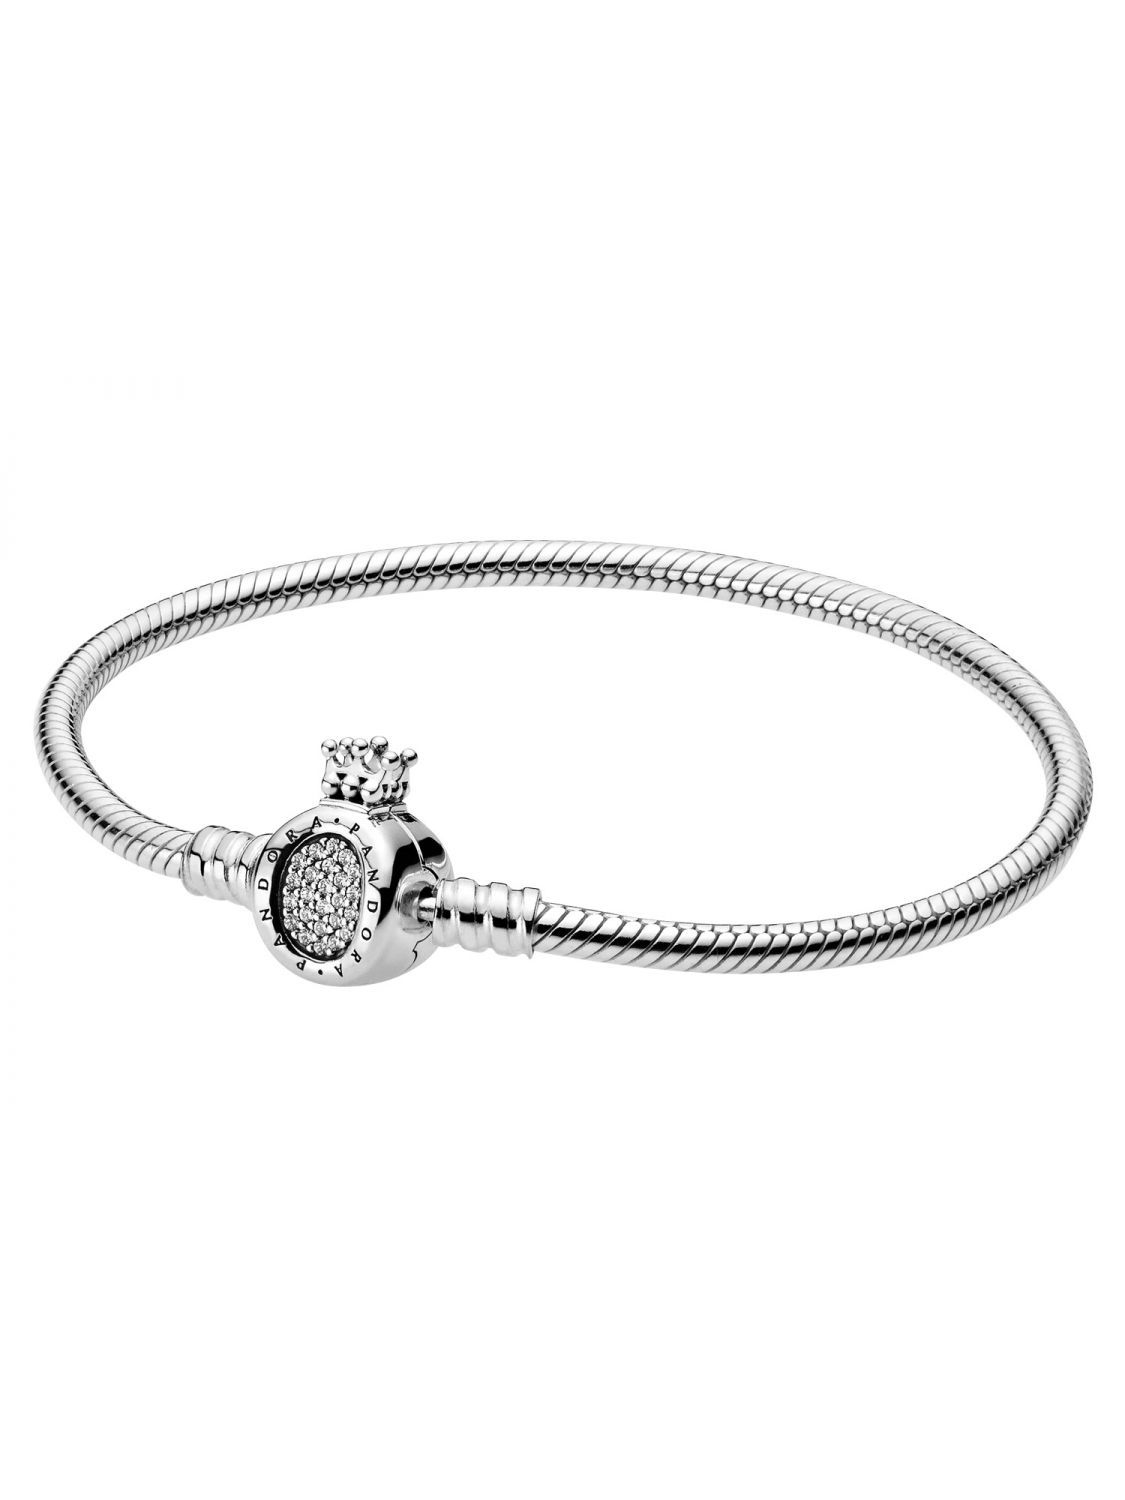 Pandora Armband für Damen - Moments O & Snake - 598286CZ online kaufen